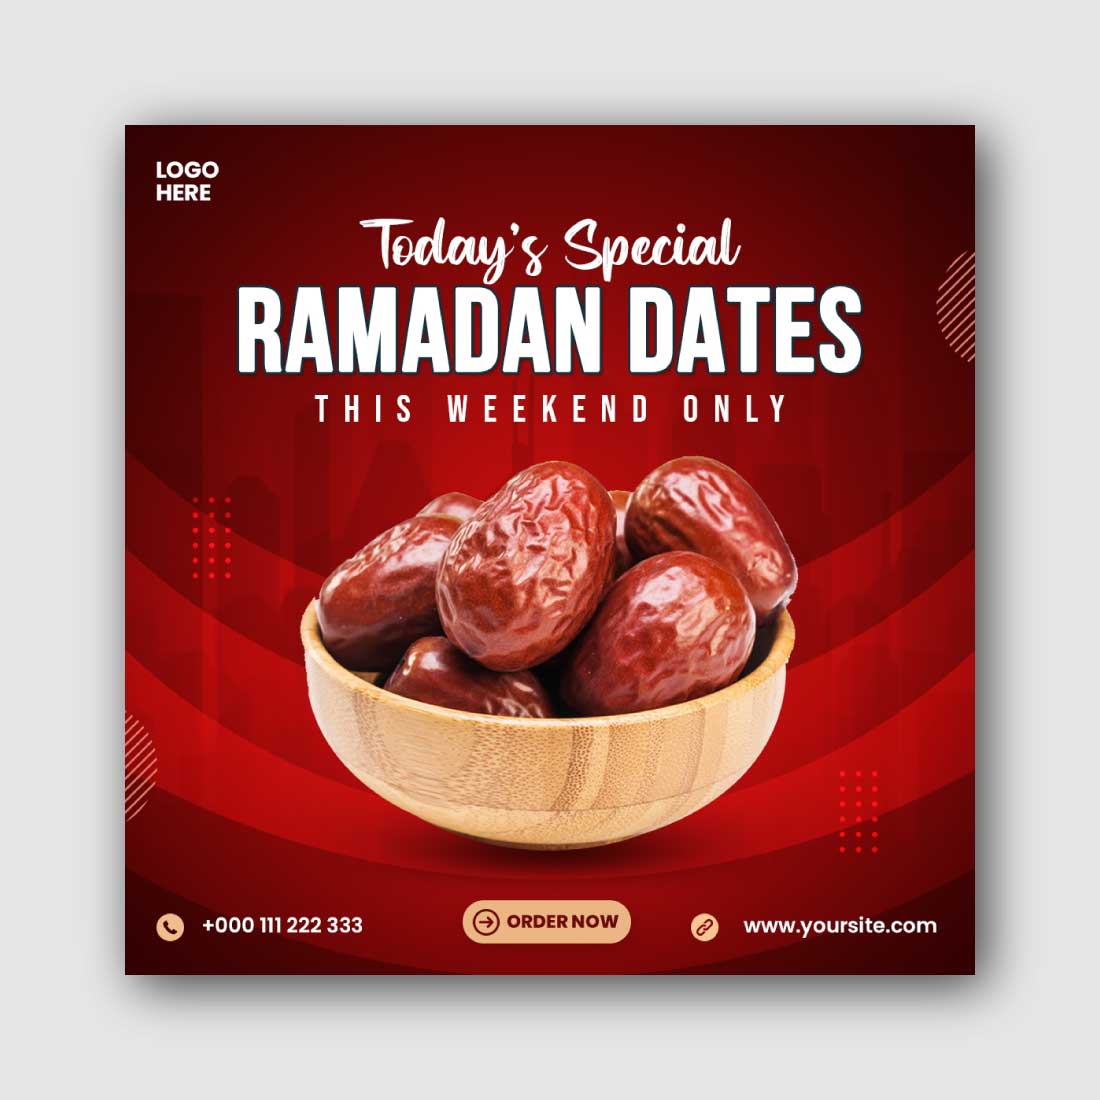 Ramadan Dates Social Media Instagram Post Template cover image.